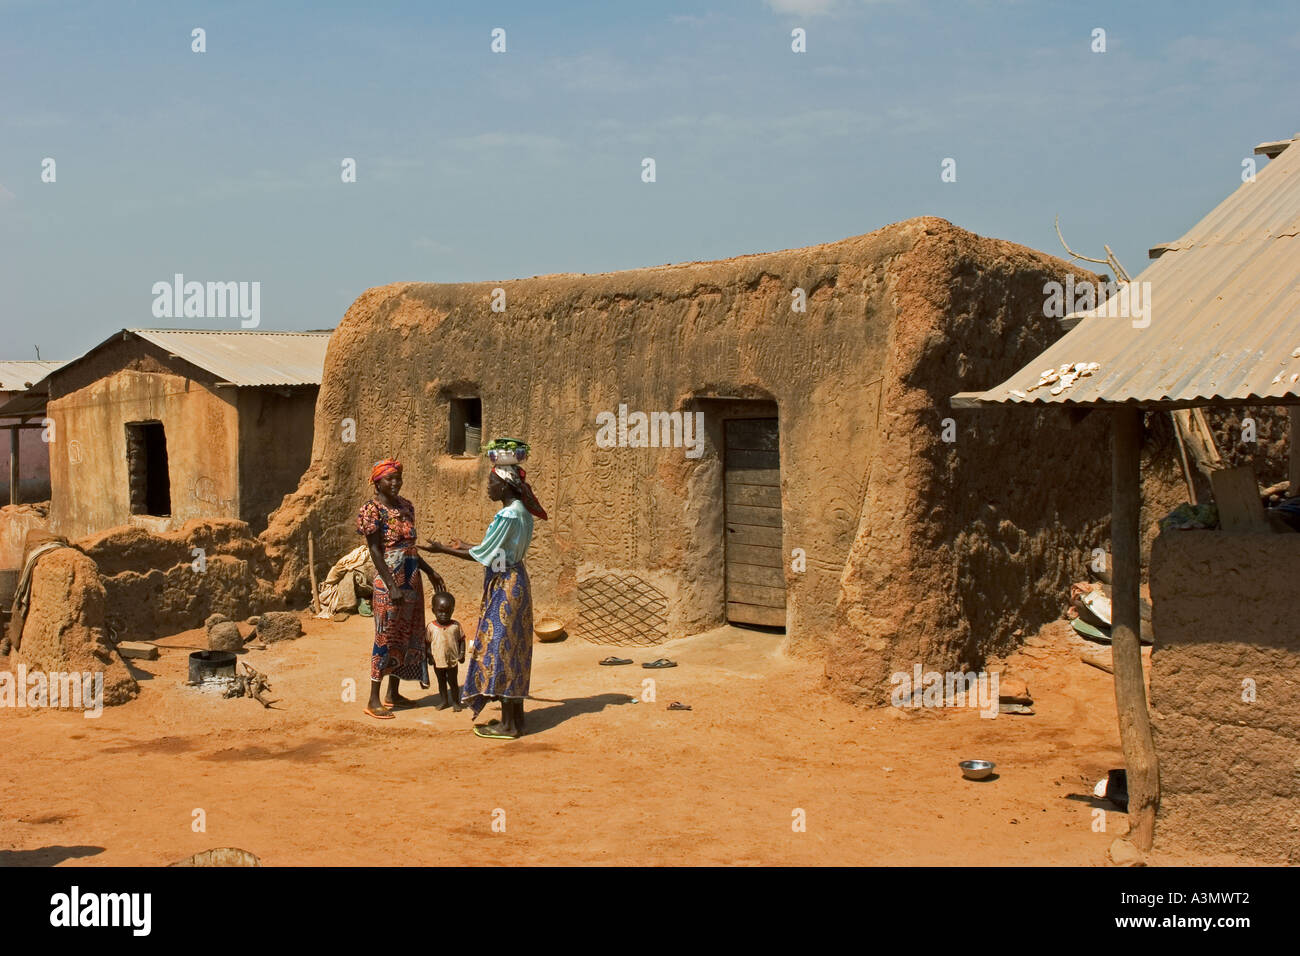 Village women with child Larabanga Ghana showing vernacular architecture with patterned mud walls Stock Photo